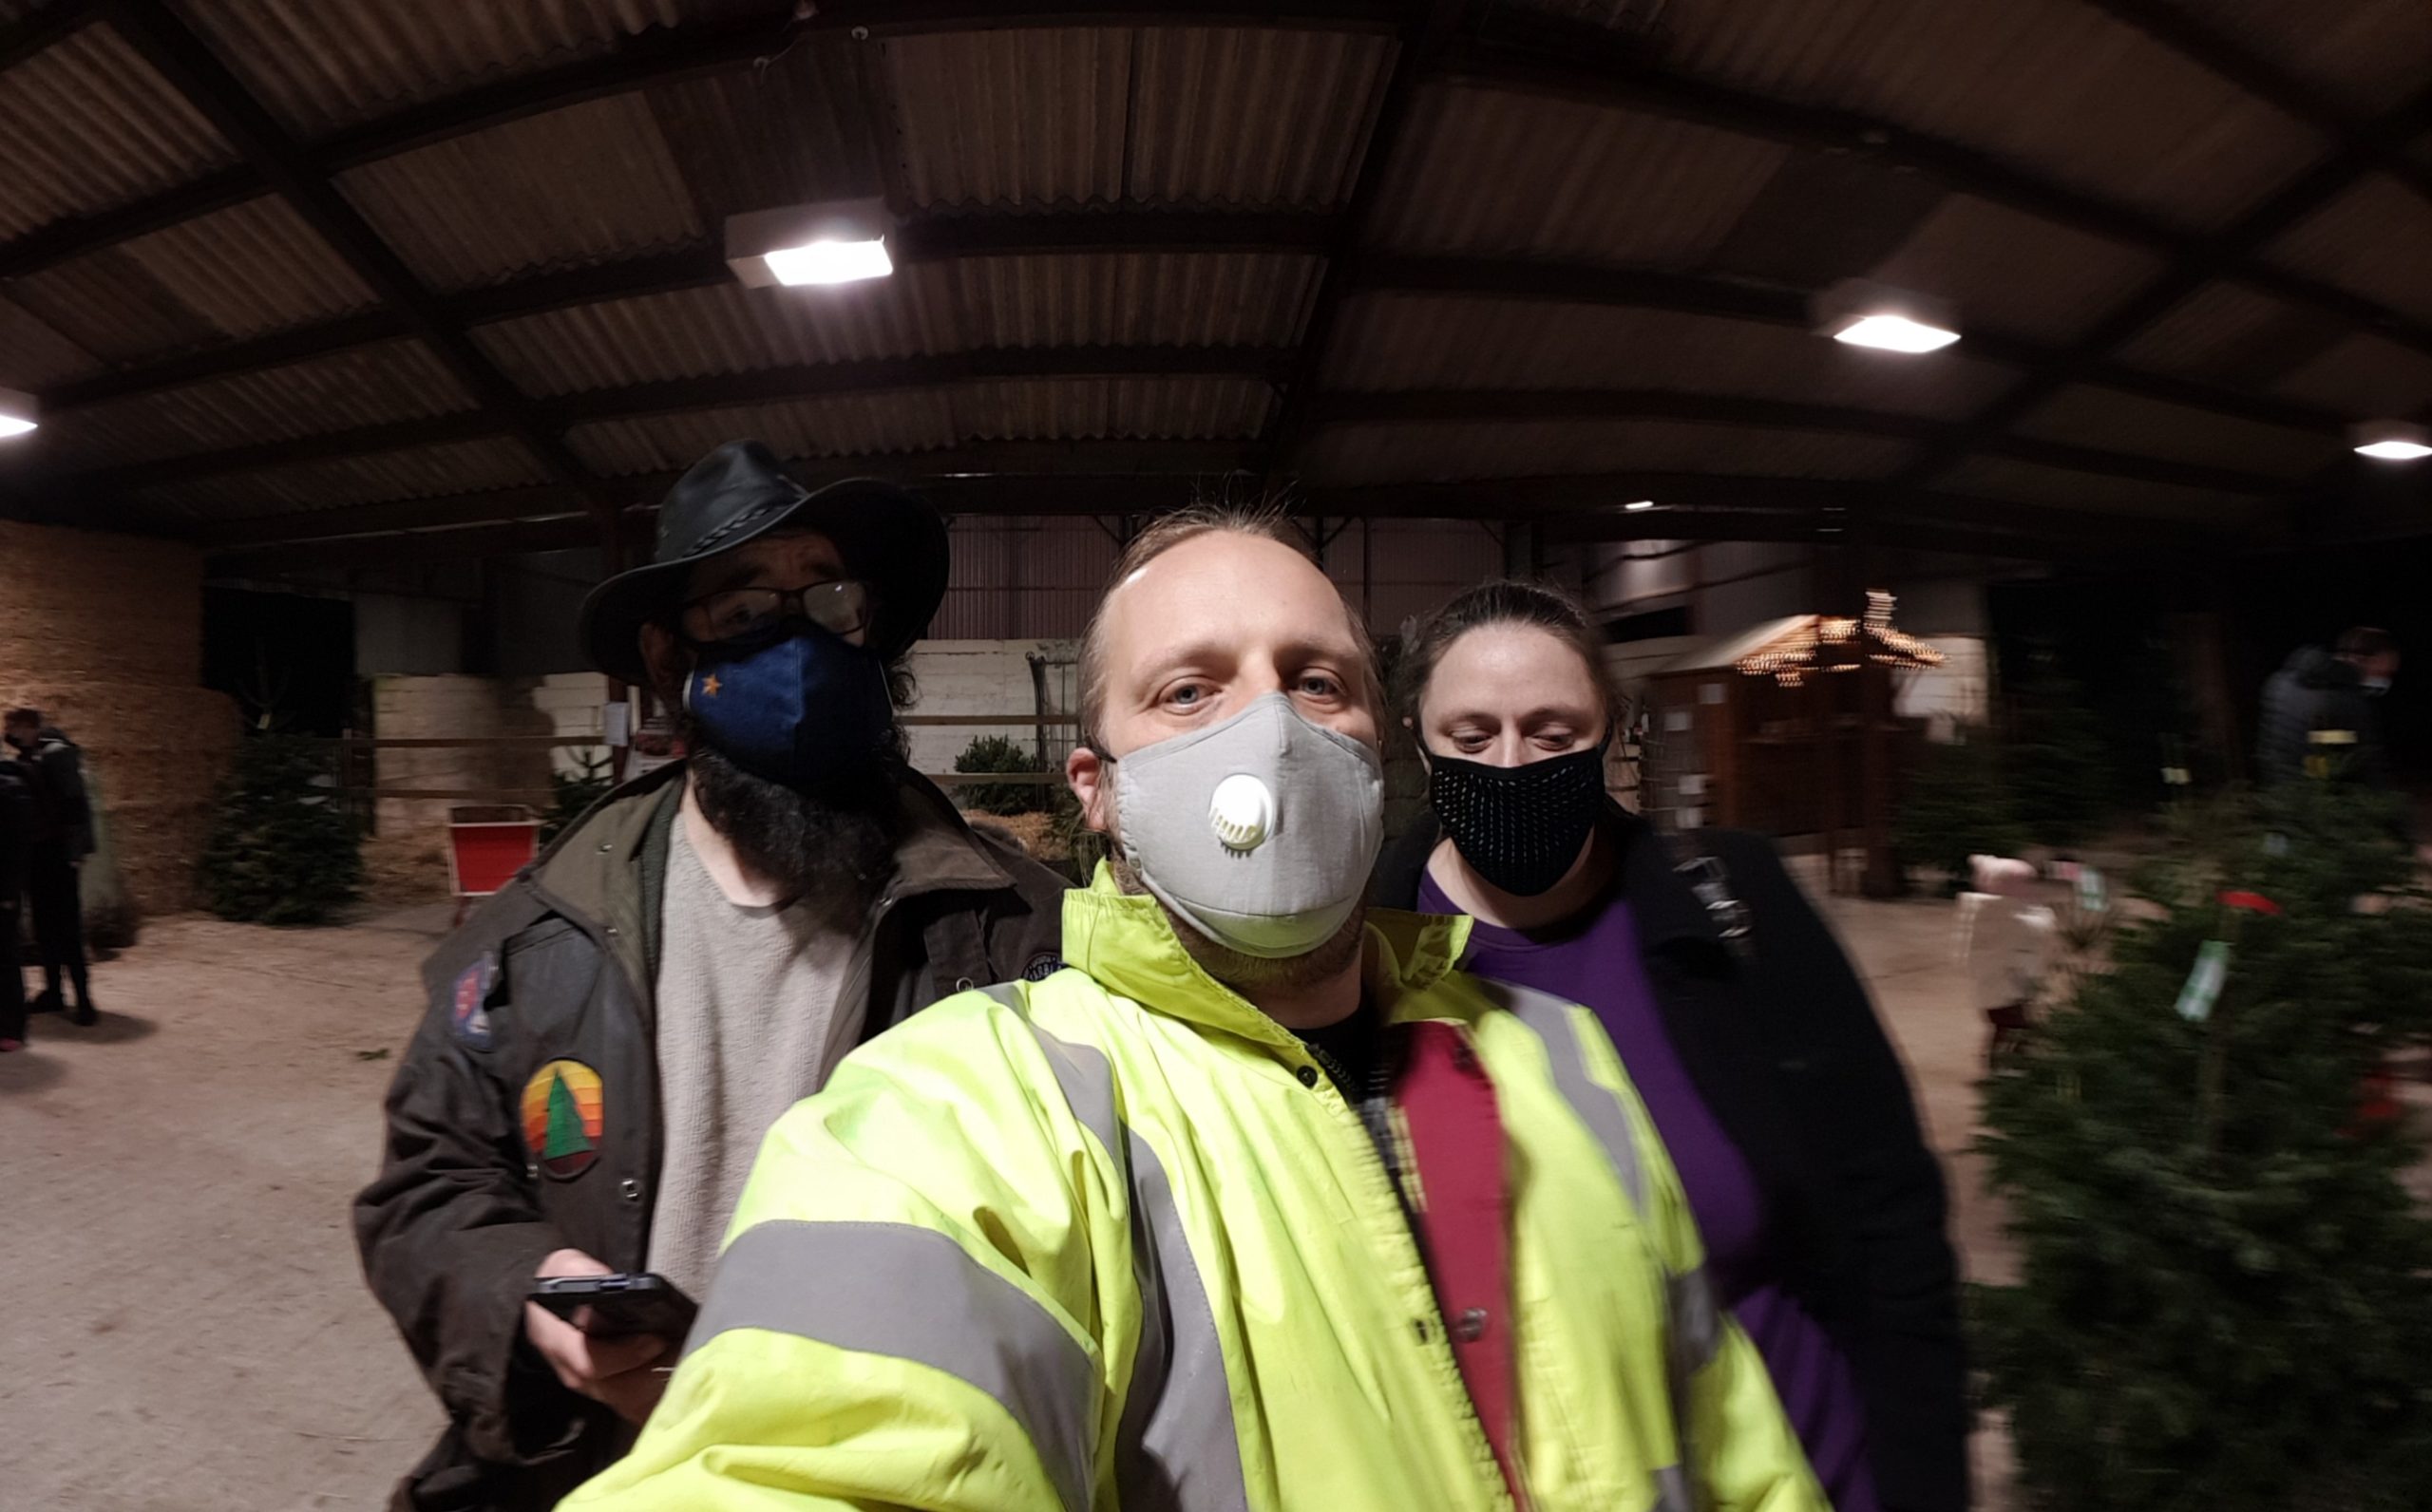 JTA, Dan and Ruth shopping for a Christmas tree, wearing face masks